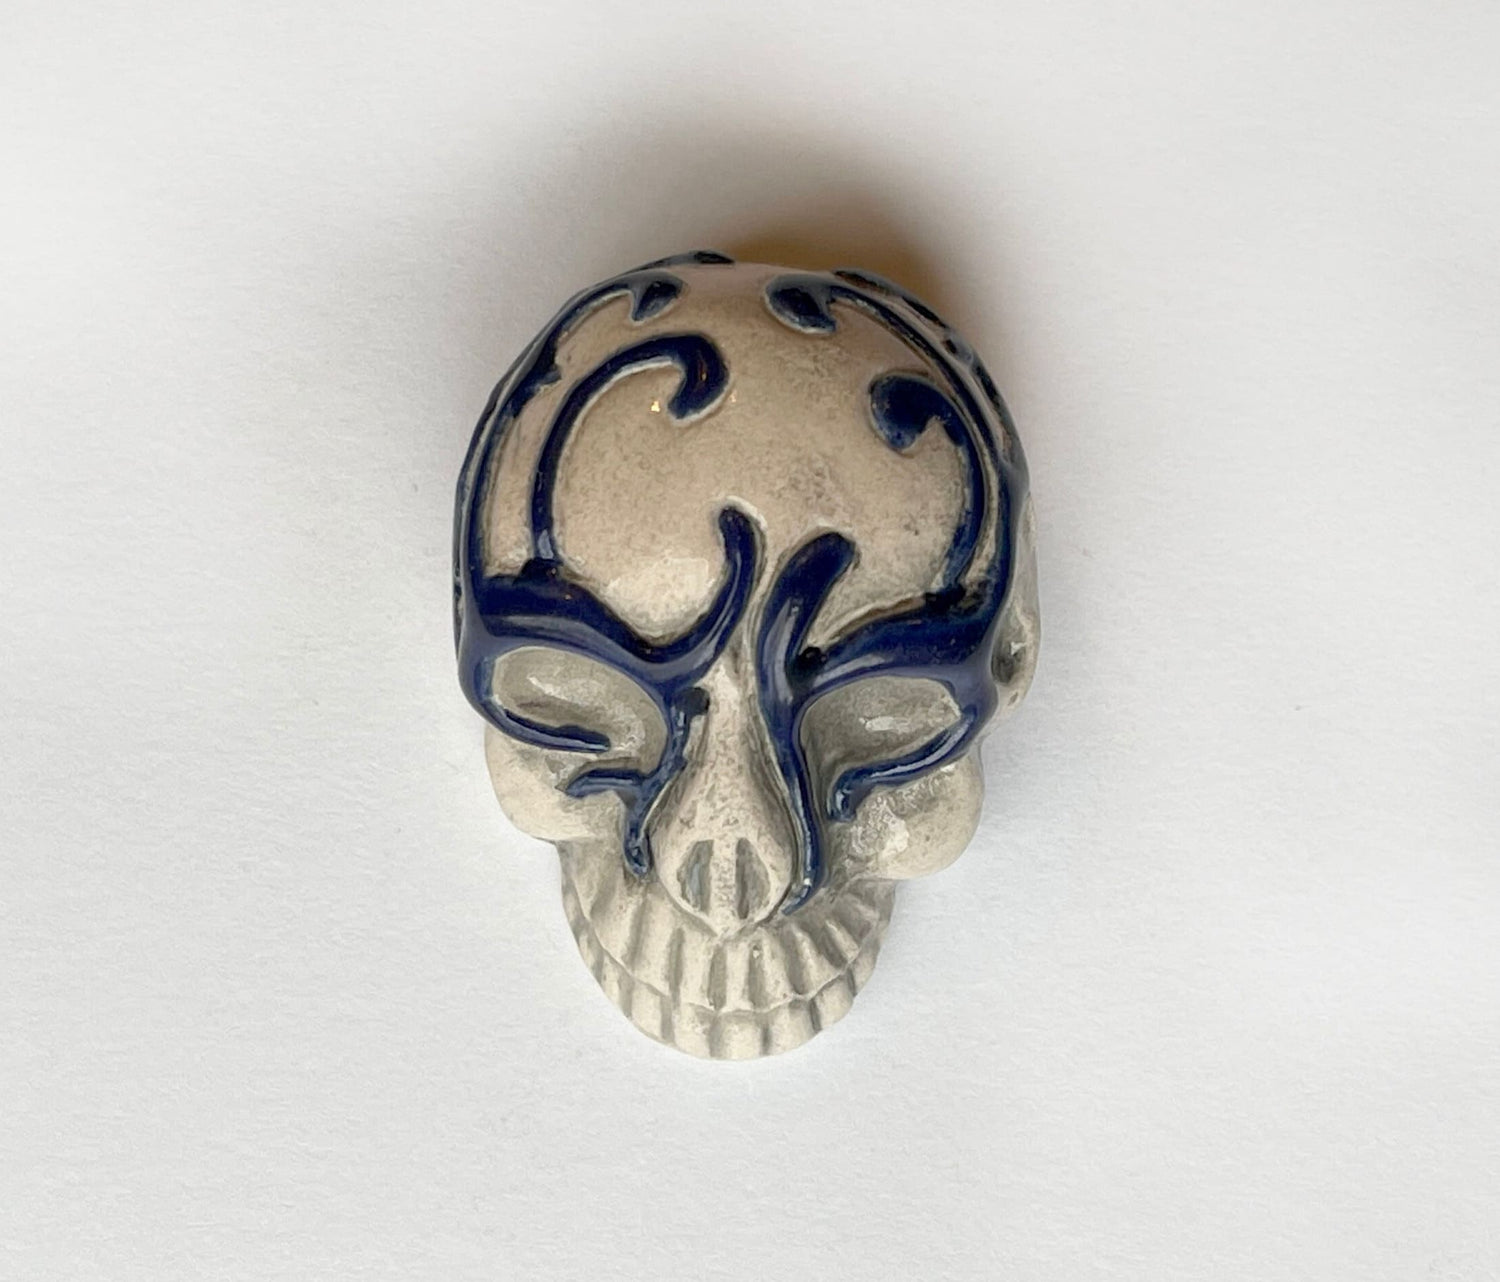 Sugar Skull Focal Bead Pendant-LIMITED EDITION-Dia de los Muertos, Day of the Dead-handmade ceramic bead charm pendant